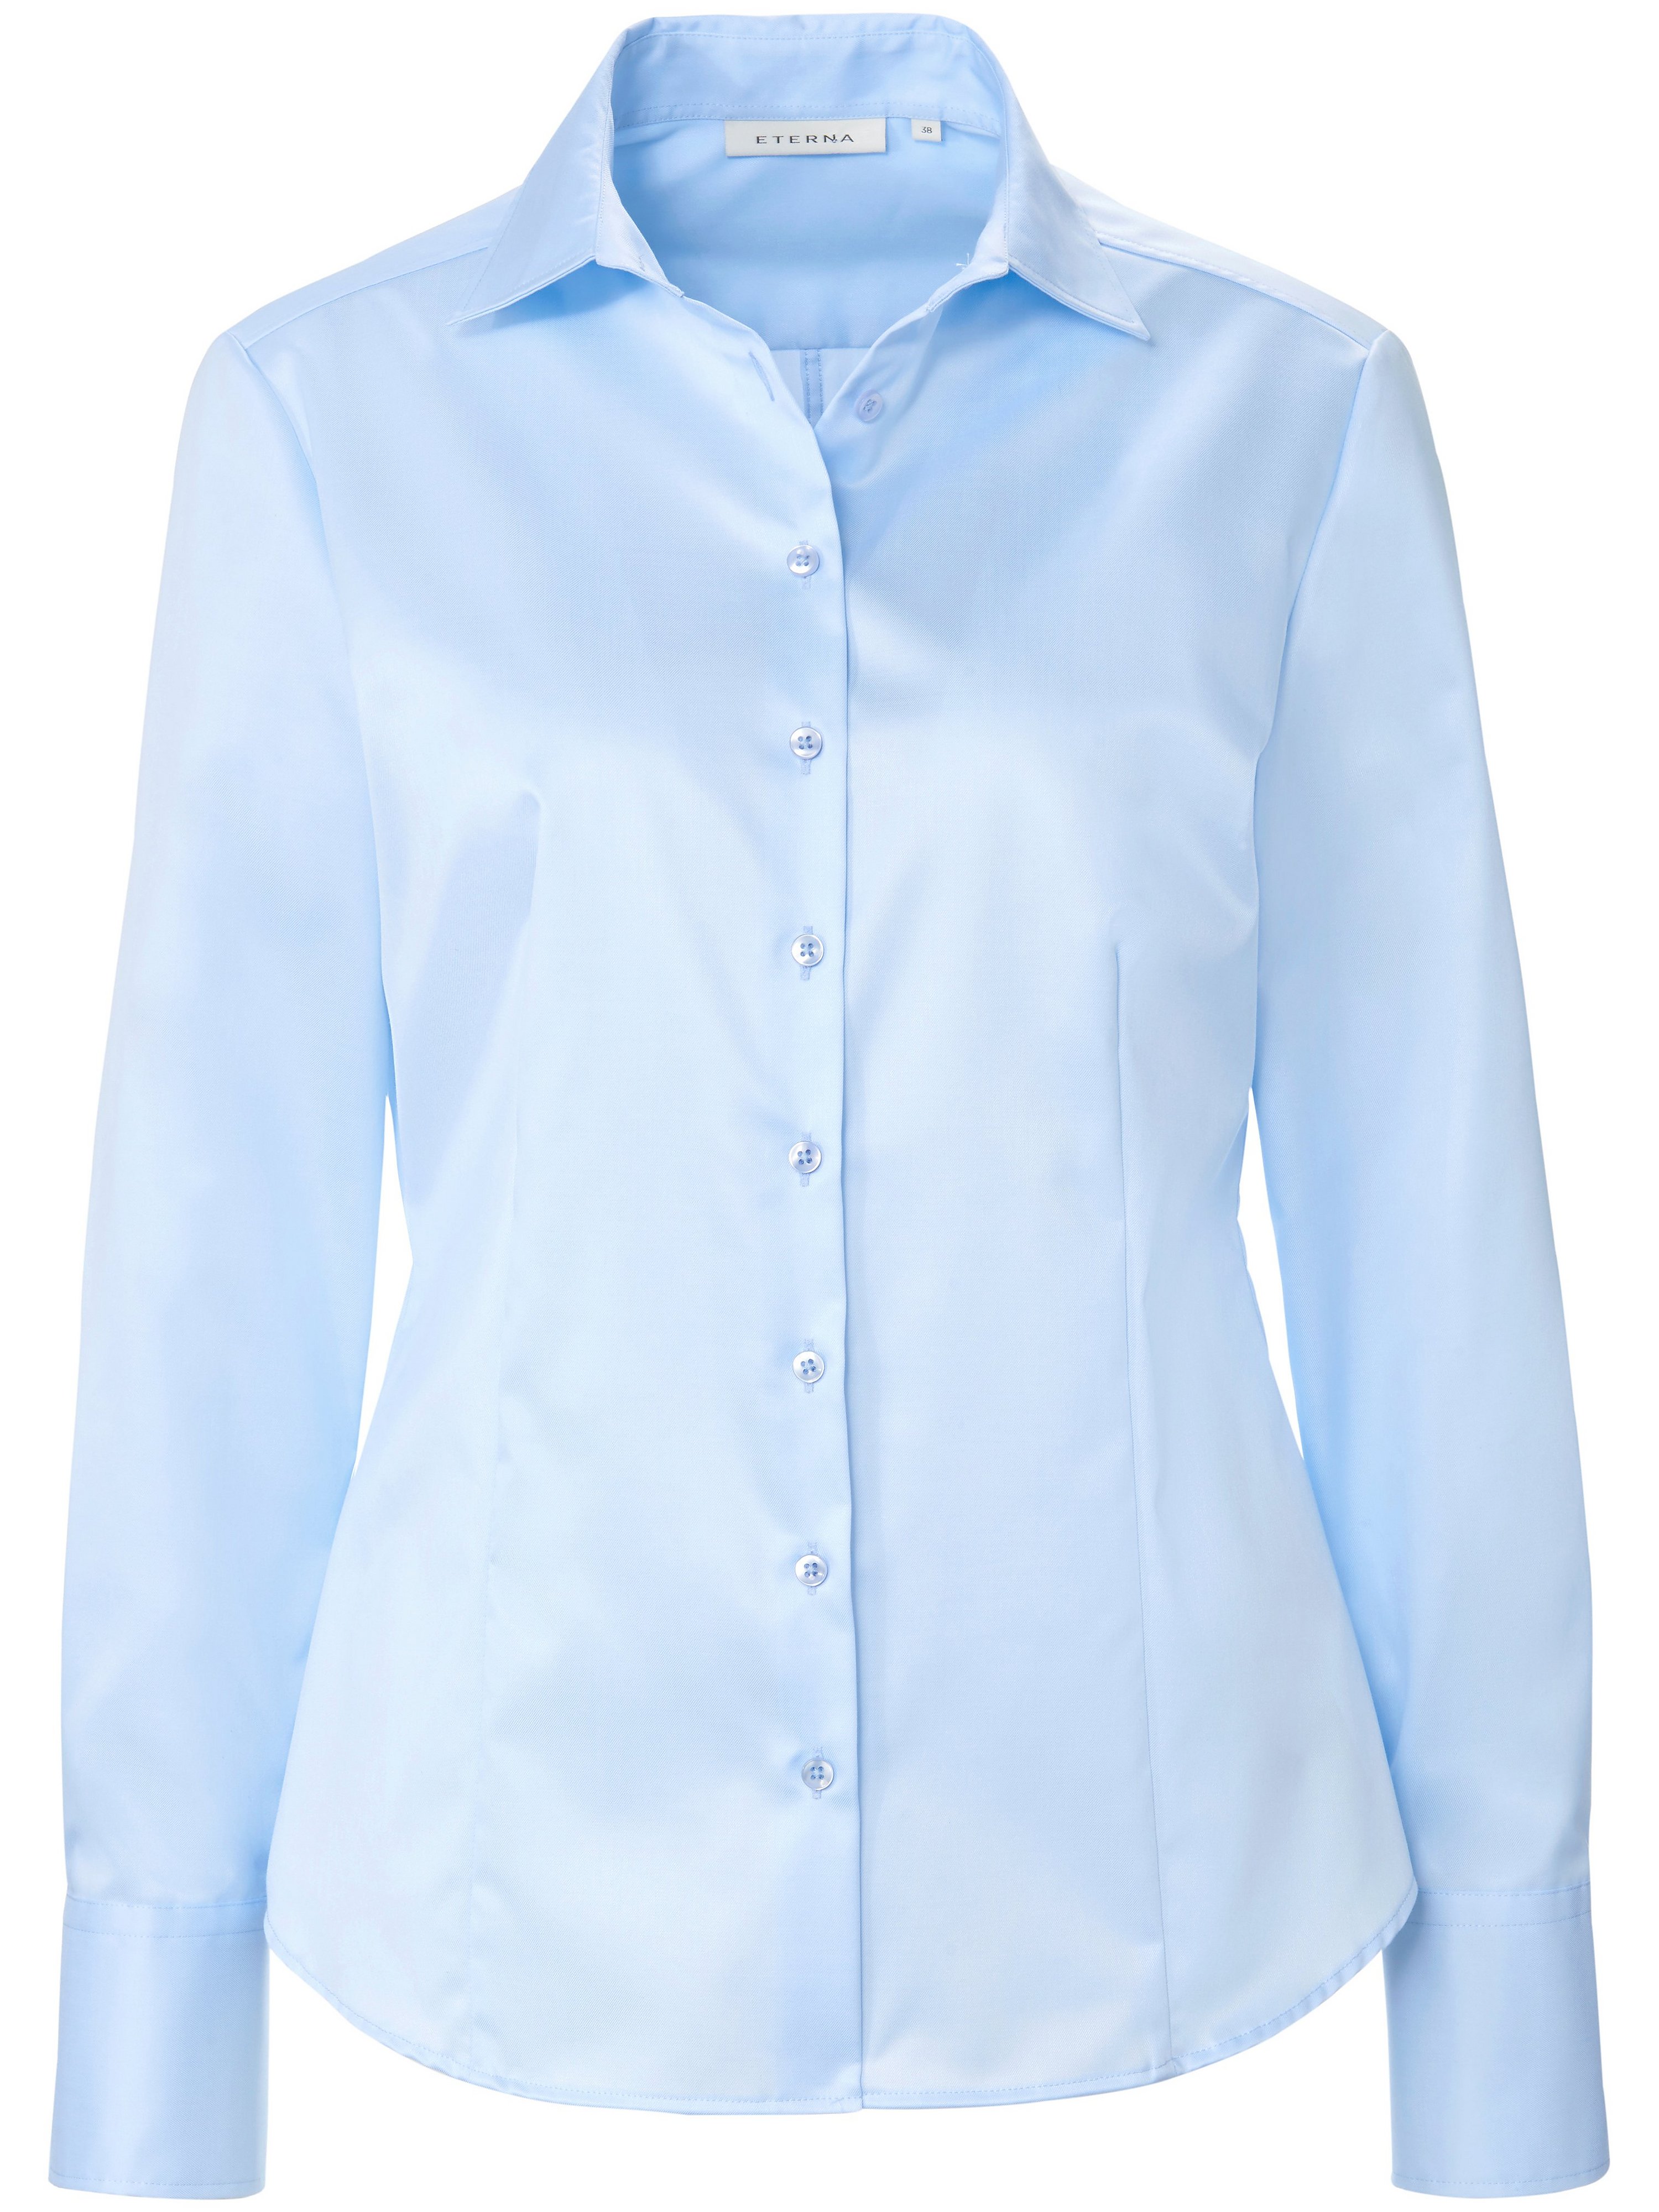 Tunic style blouse long sleeves Eterna blue